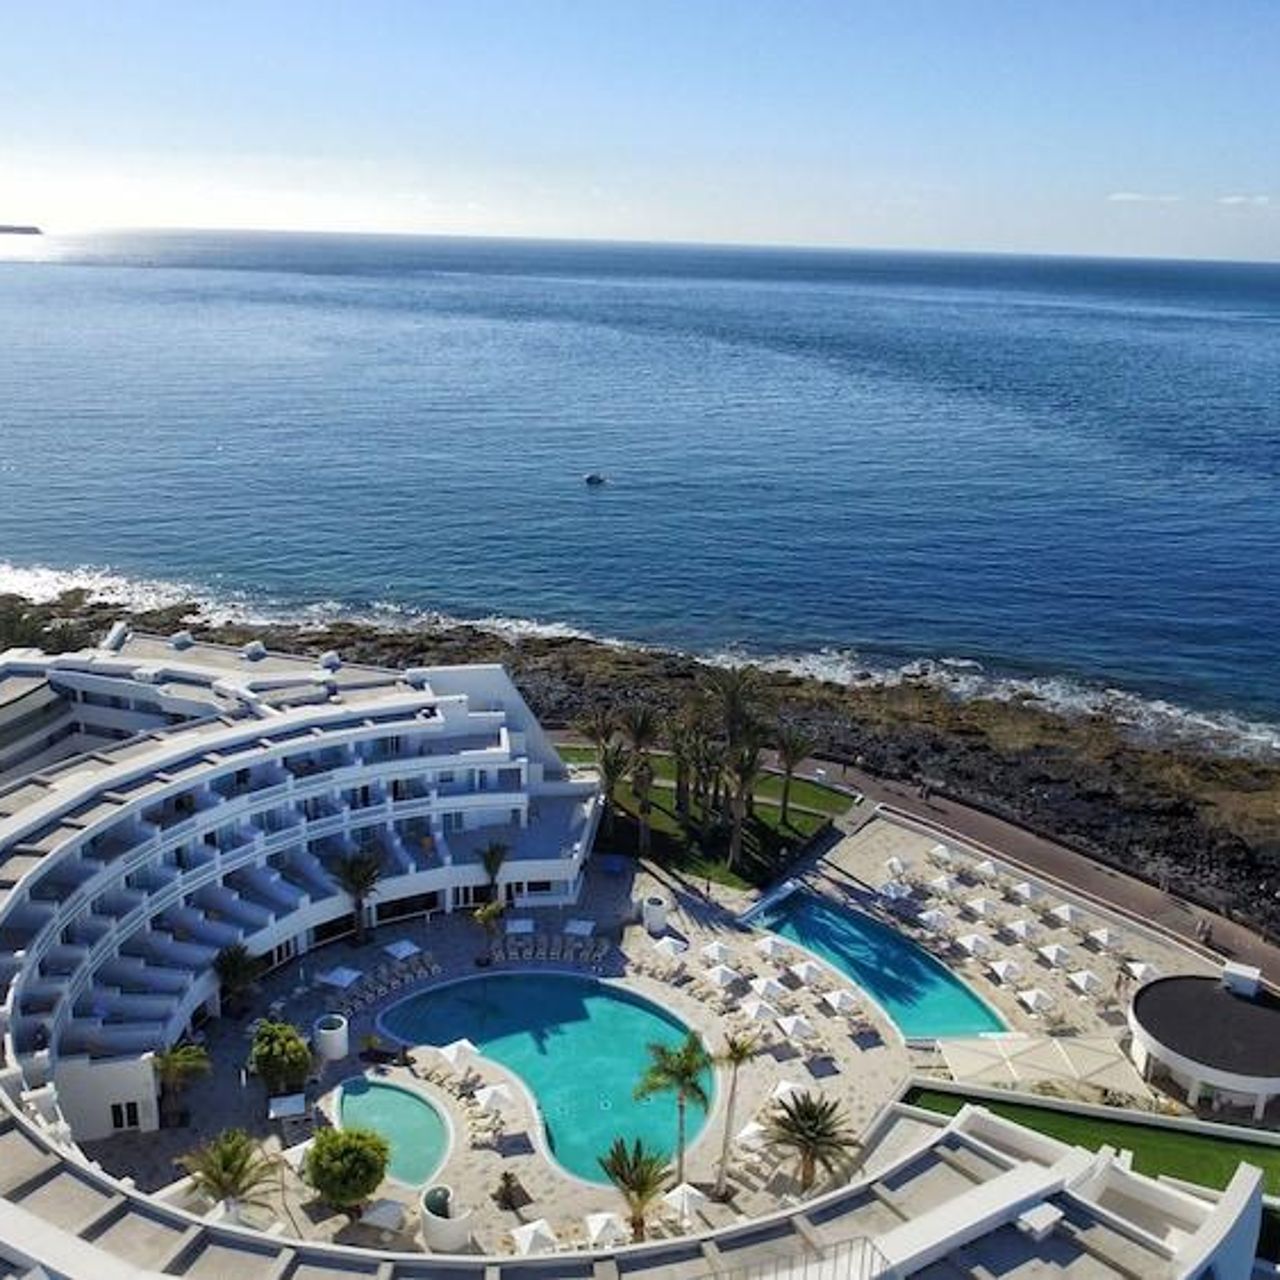 Hotel Iberostar Lanzarote Park - Yaiza - HOTEL INFO